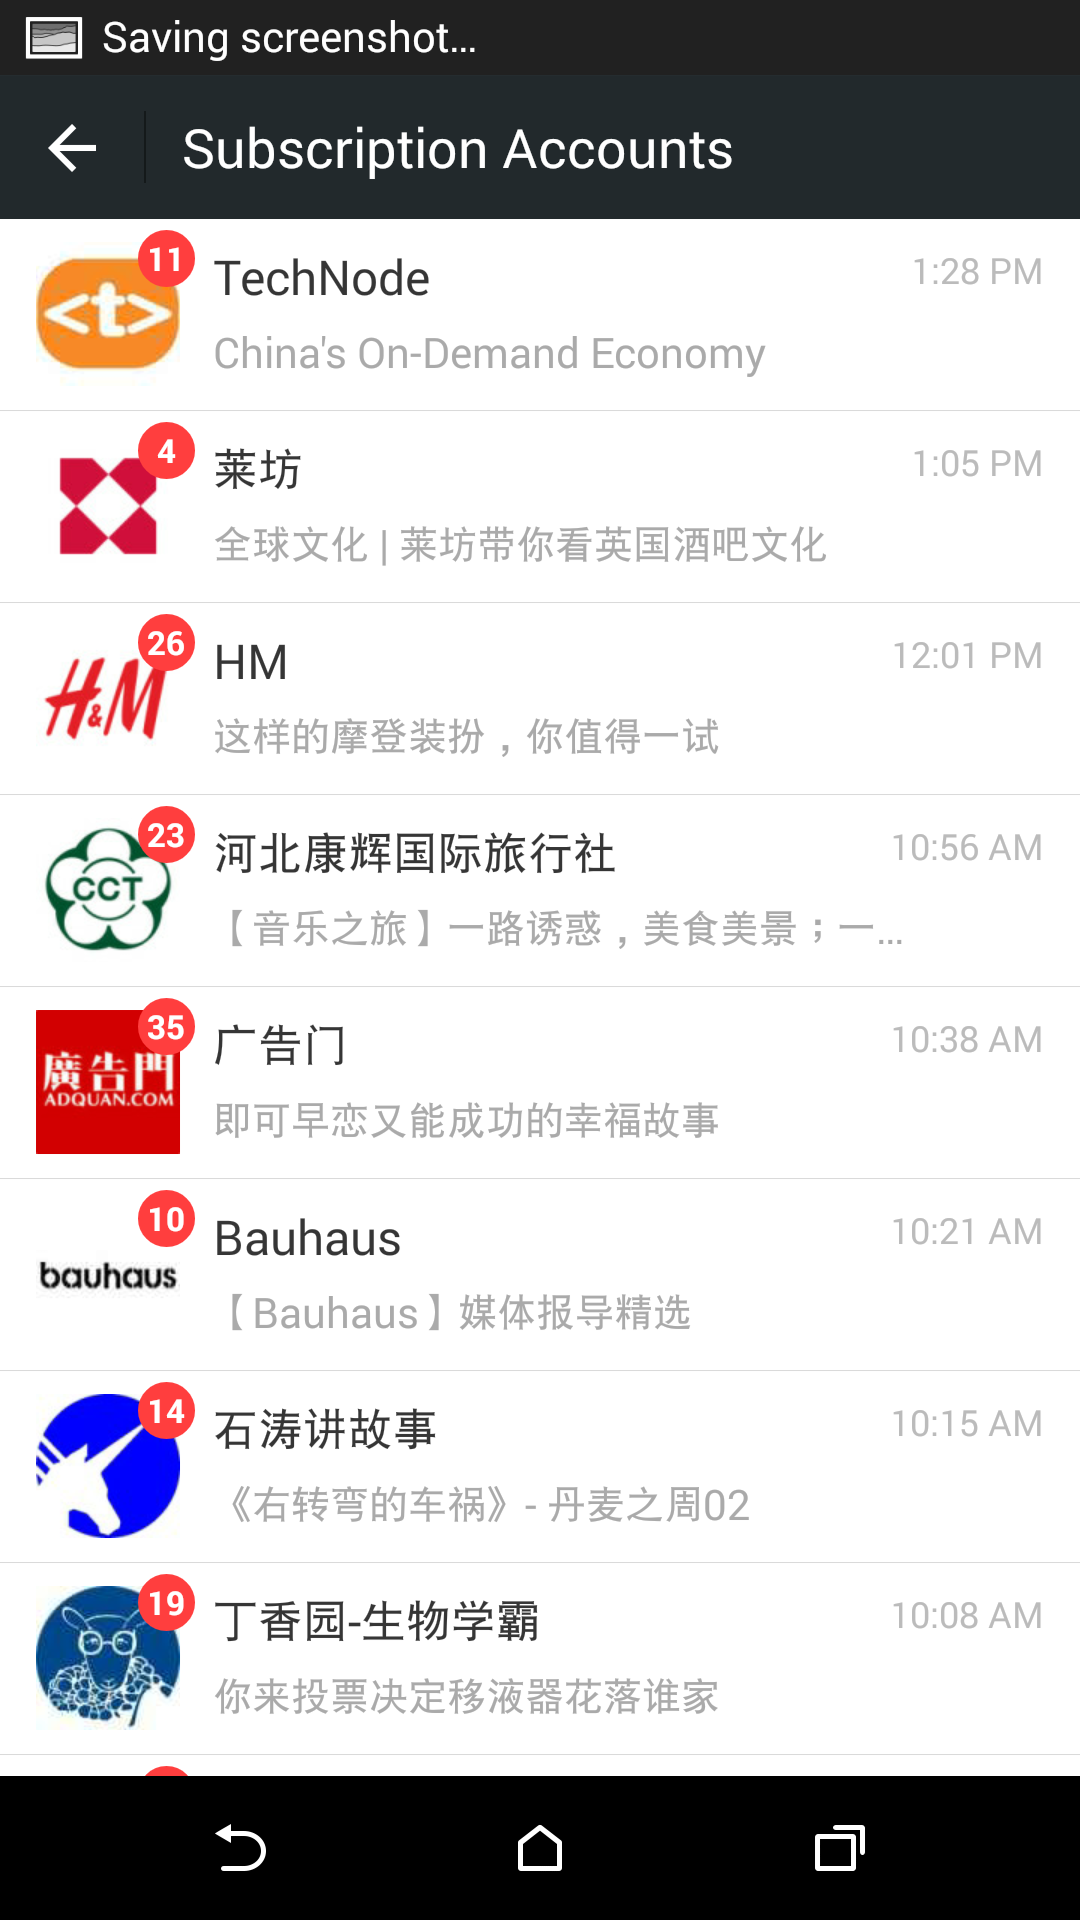 WeChat account